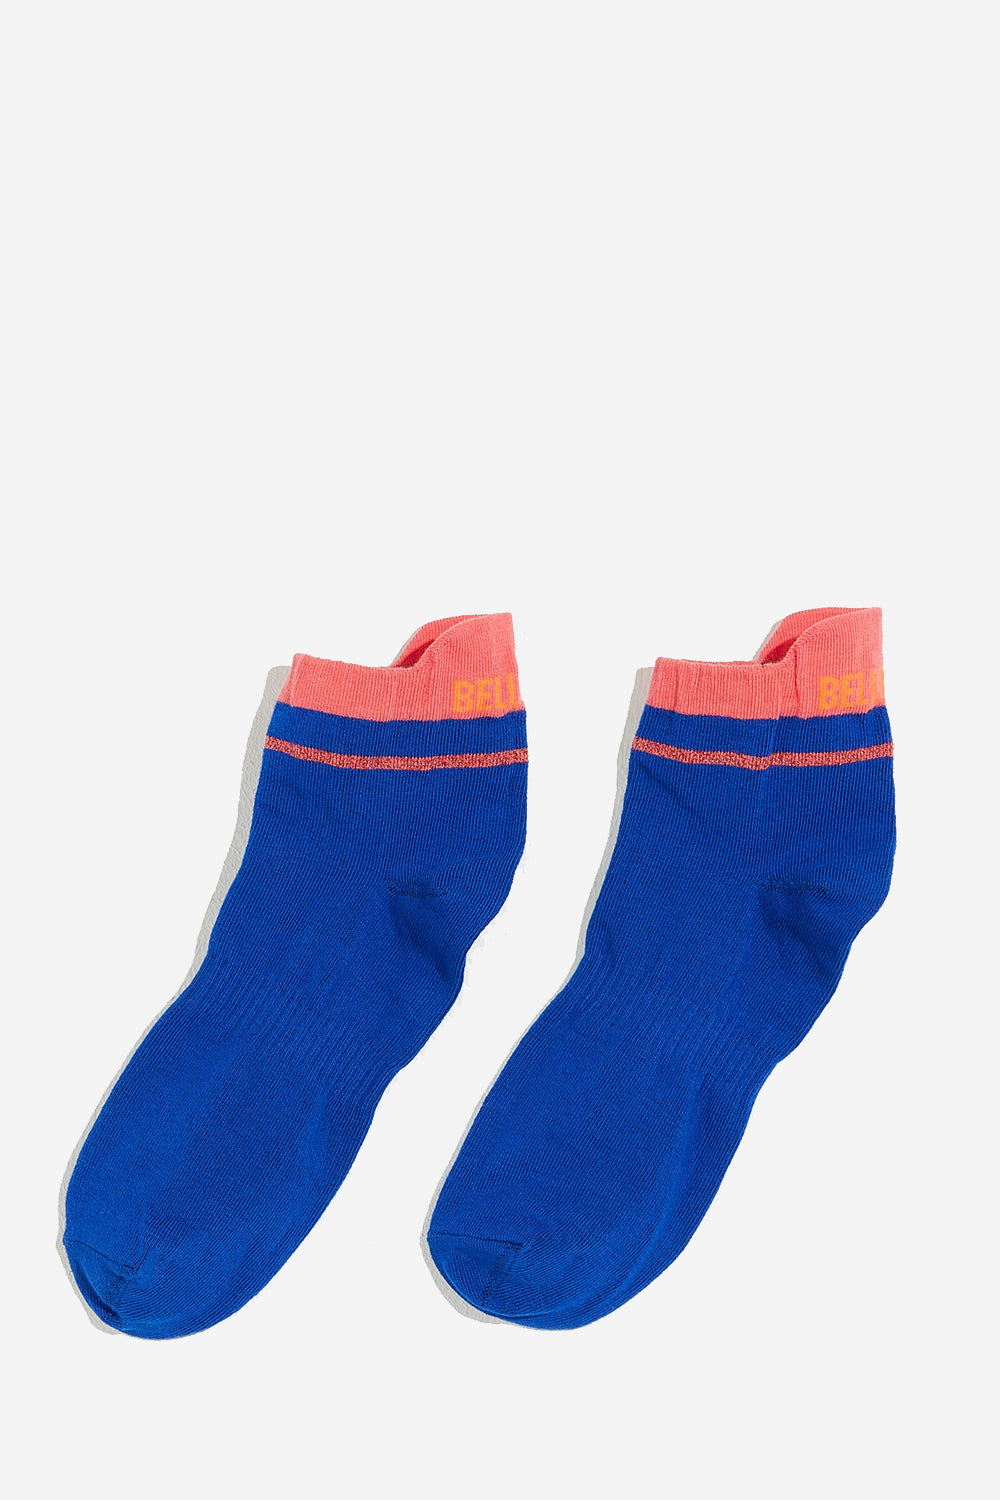 Vort socks, Lazuli